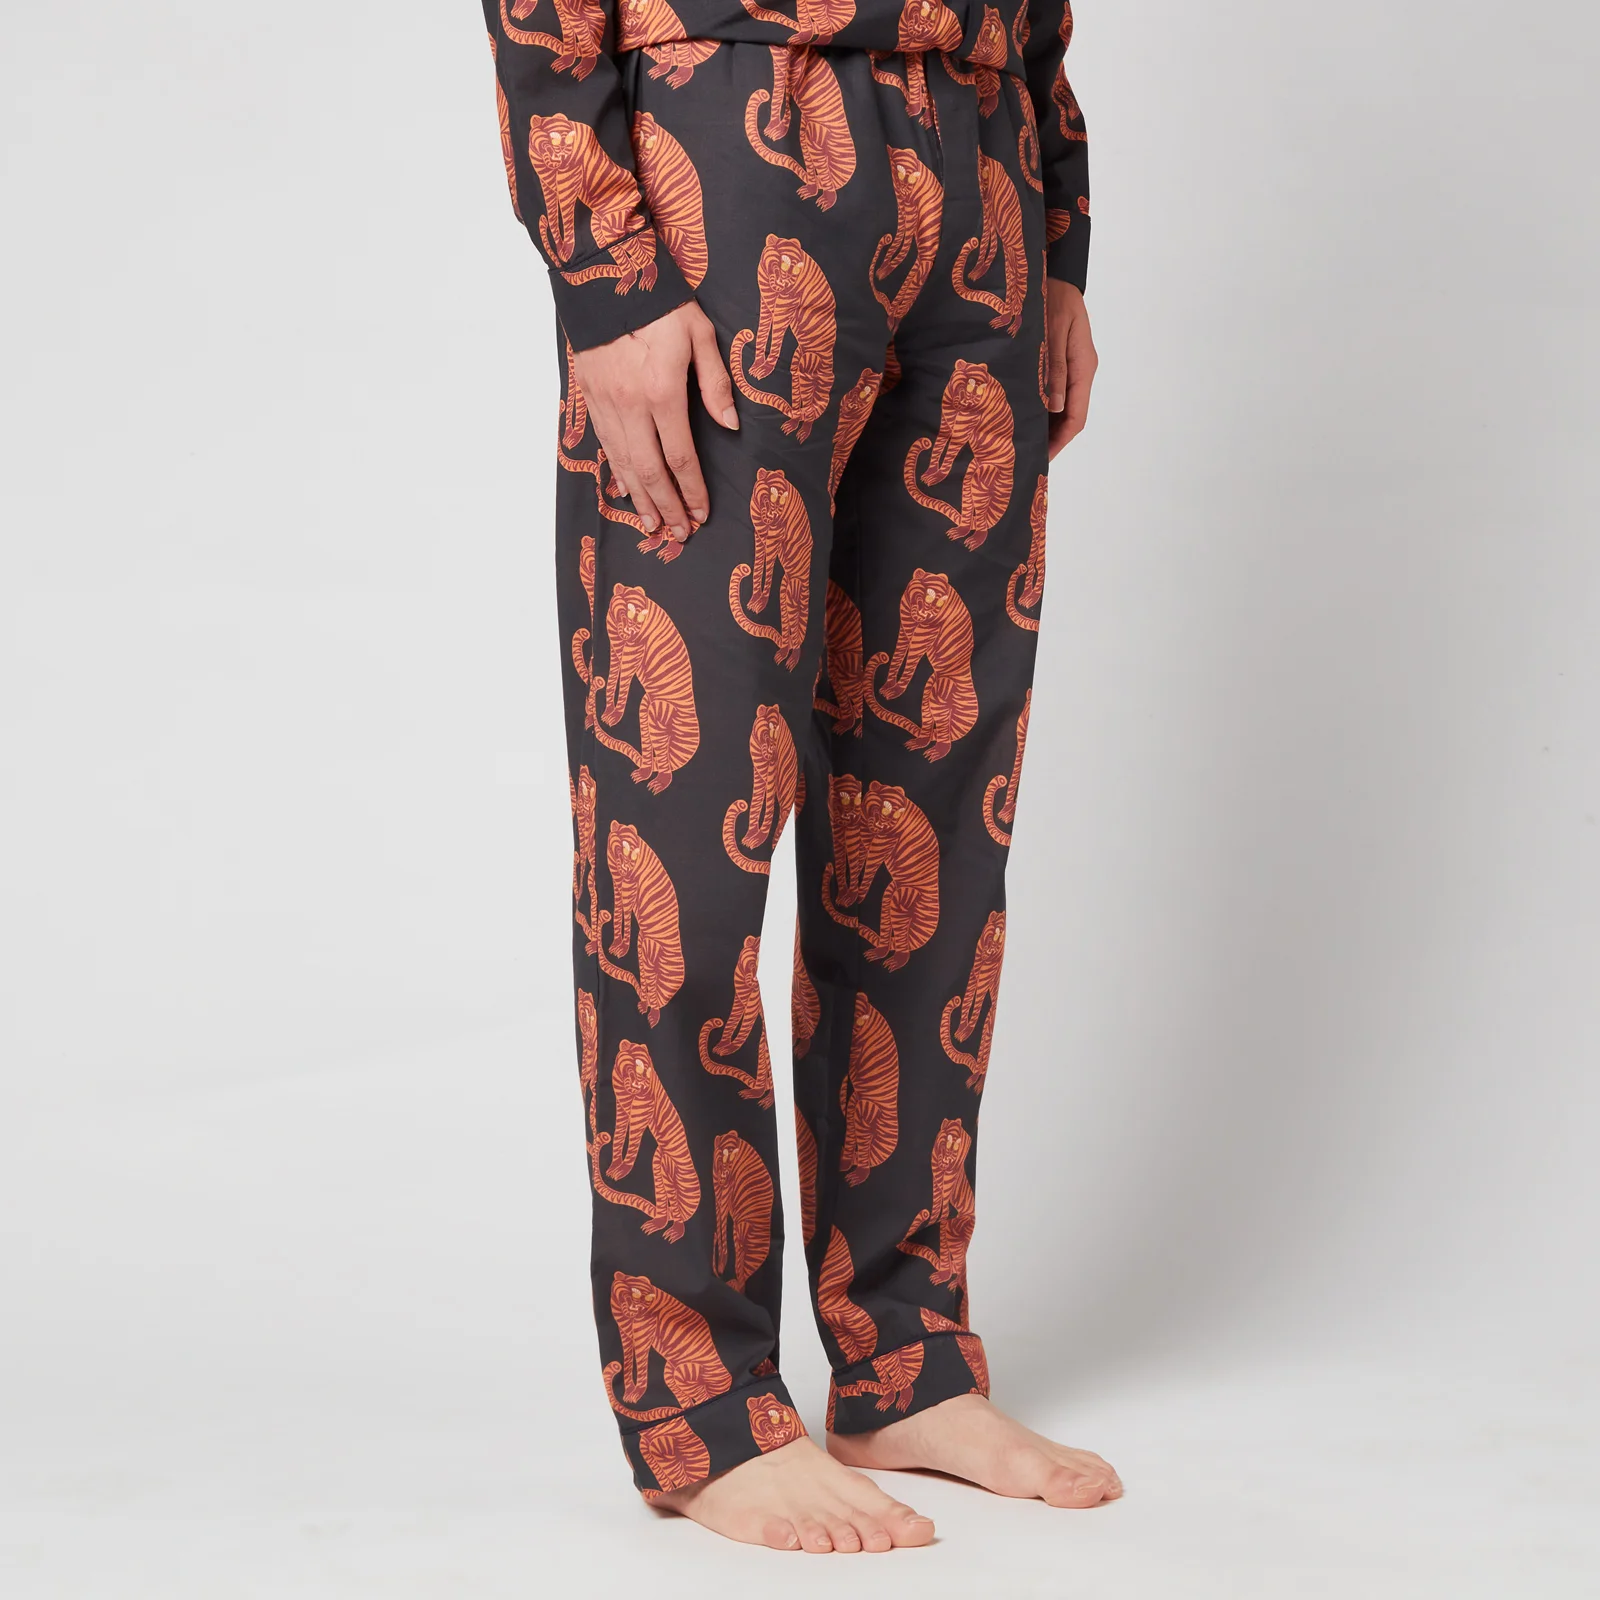 Desmond & Dempsey Men's Tiger Print Trousers - Black/Orange Image 1